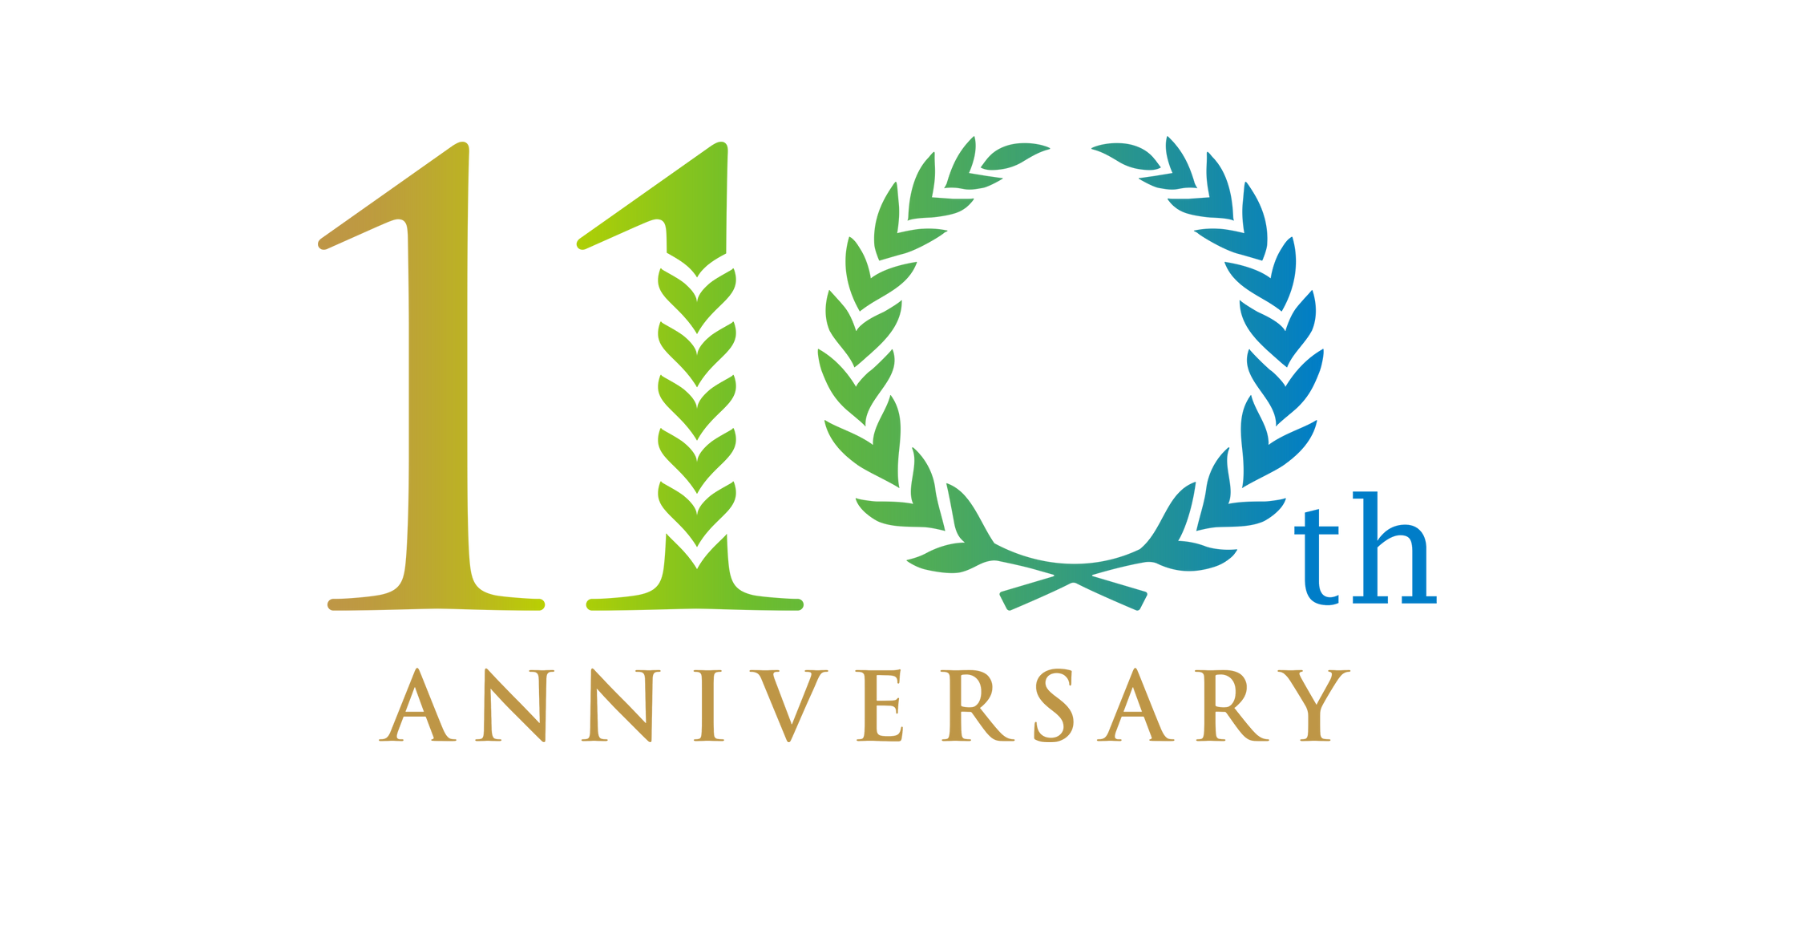 Sharp Corporations 110th Anniversery logo